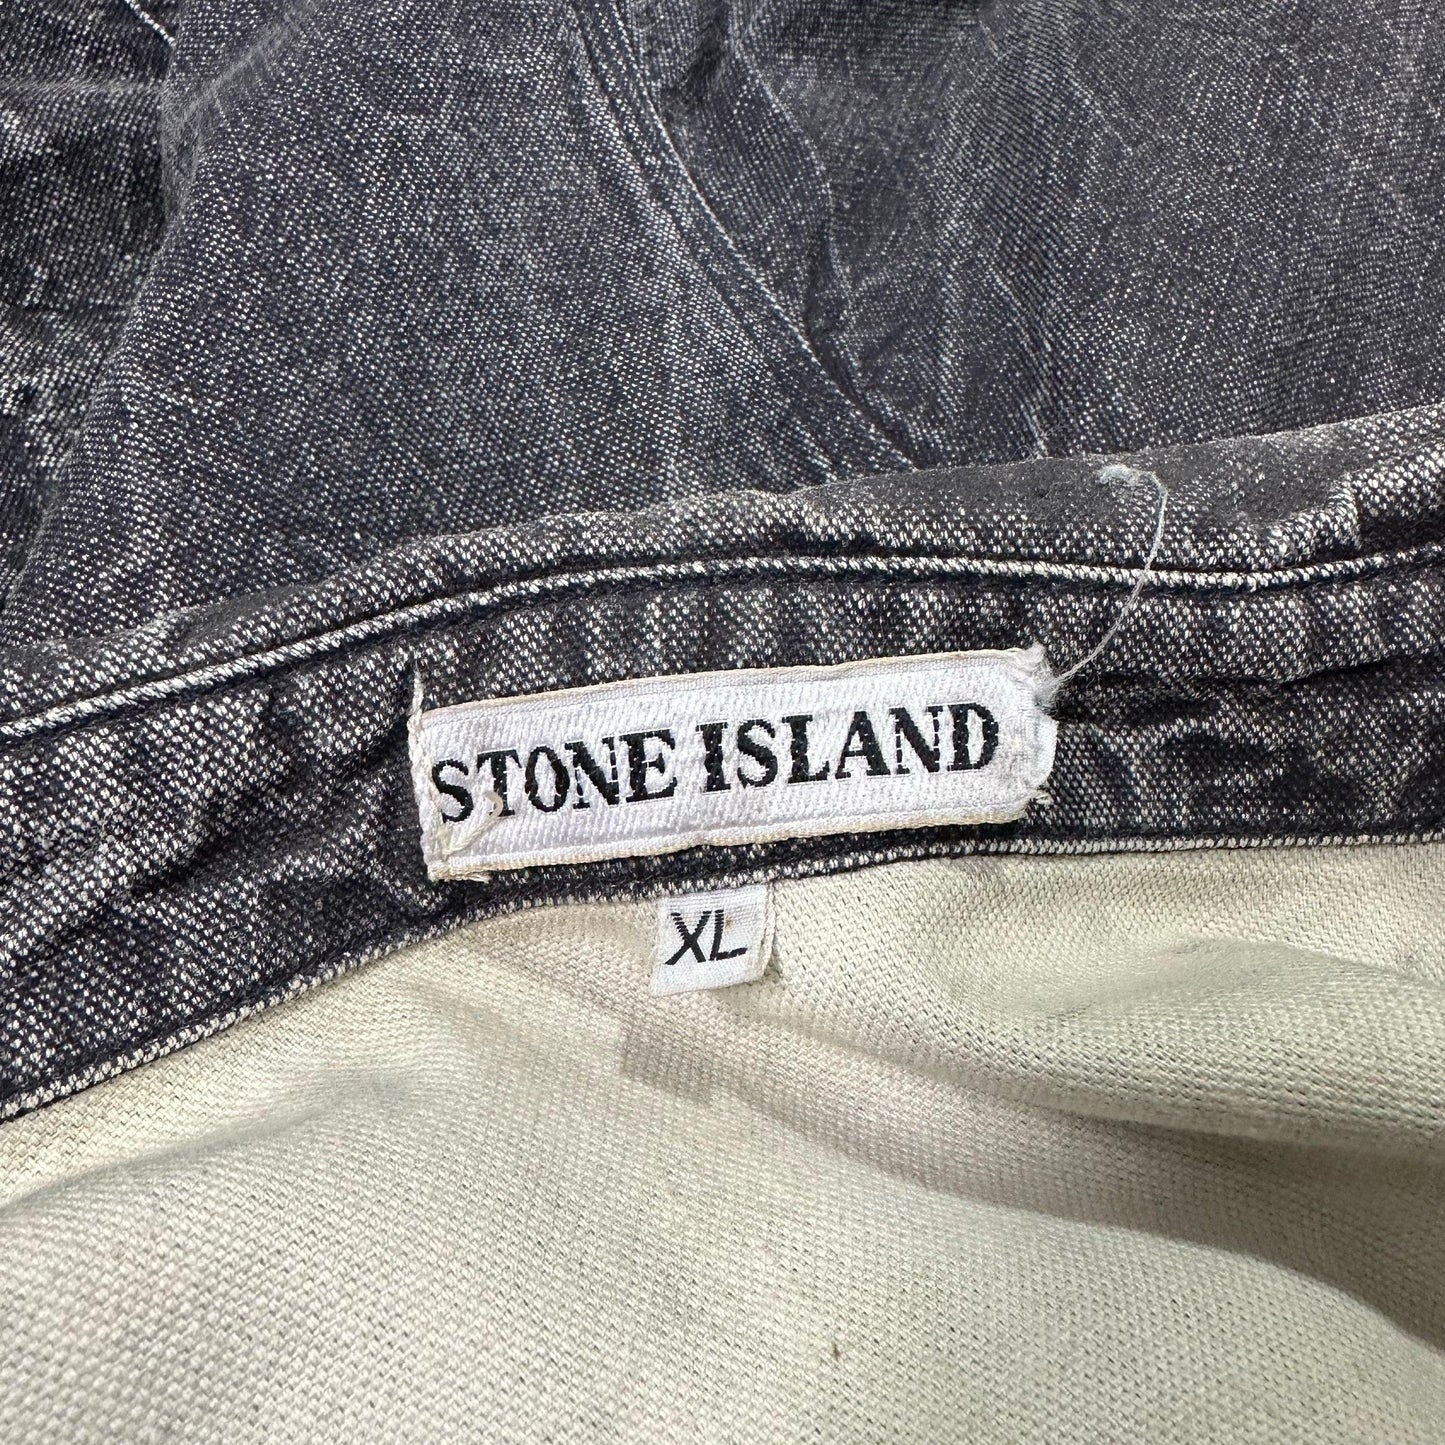 Stone Island 1986 Marina Wash Reps Pigment Jacket - Known Source